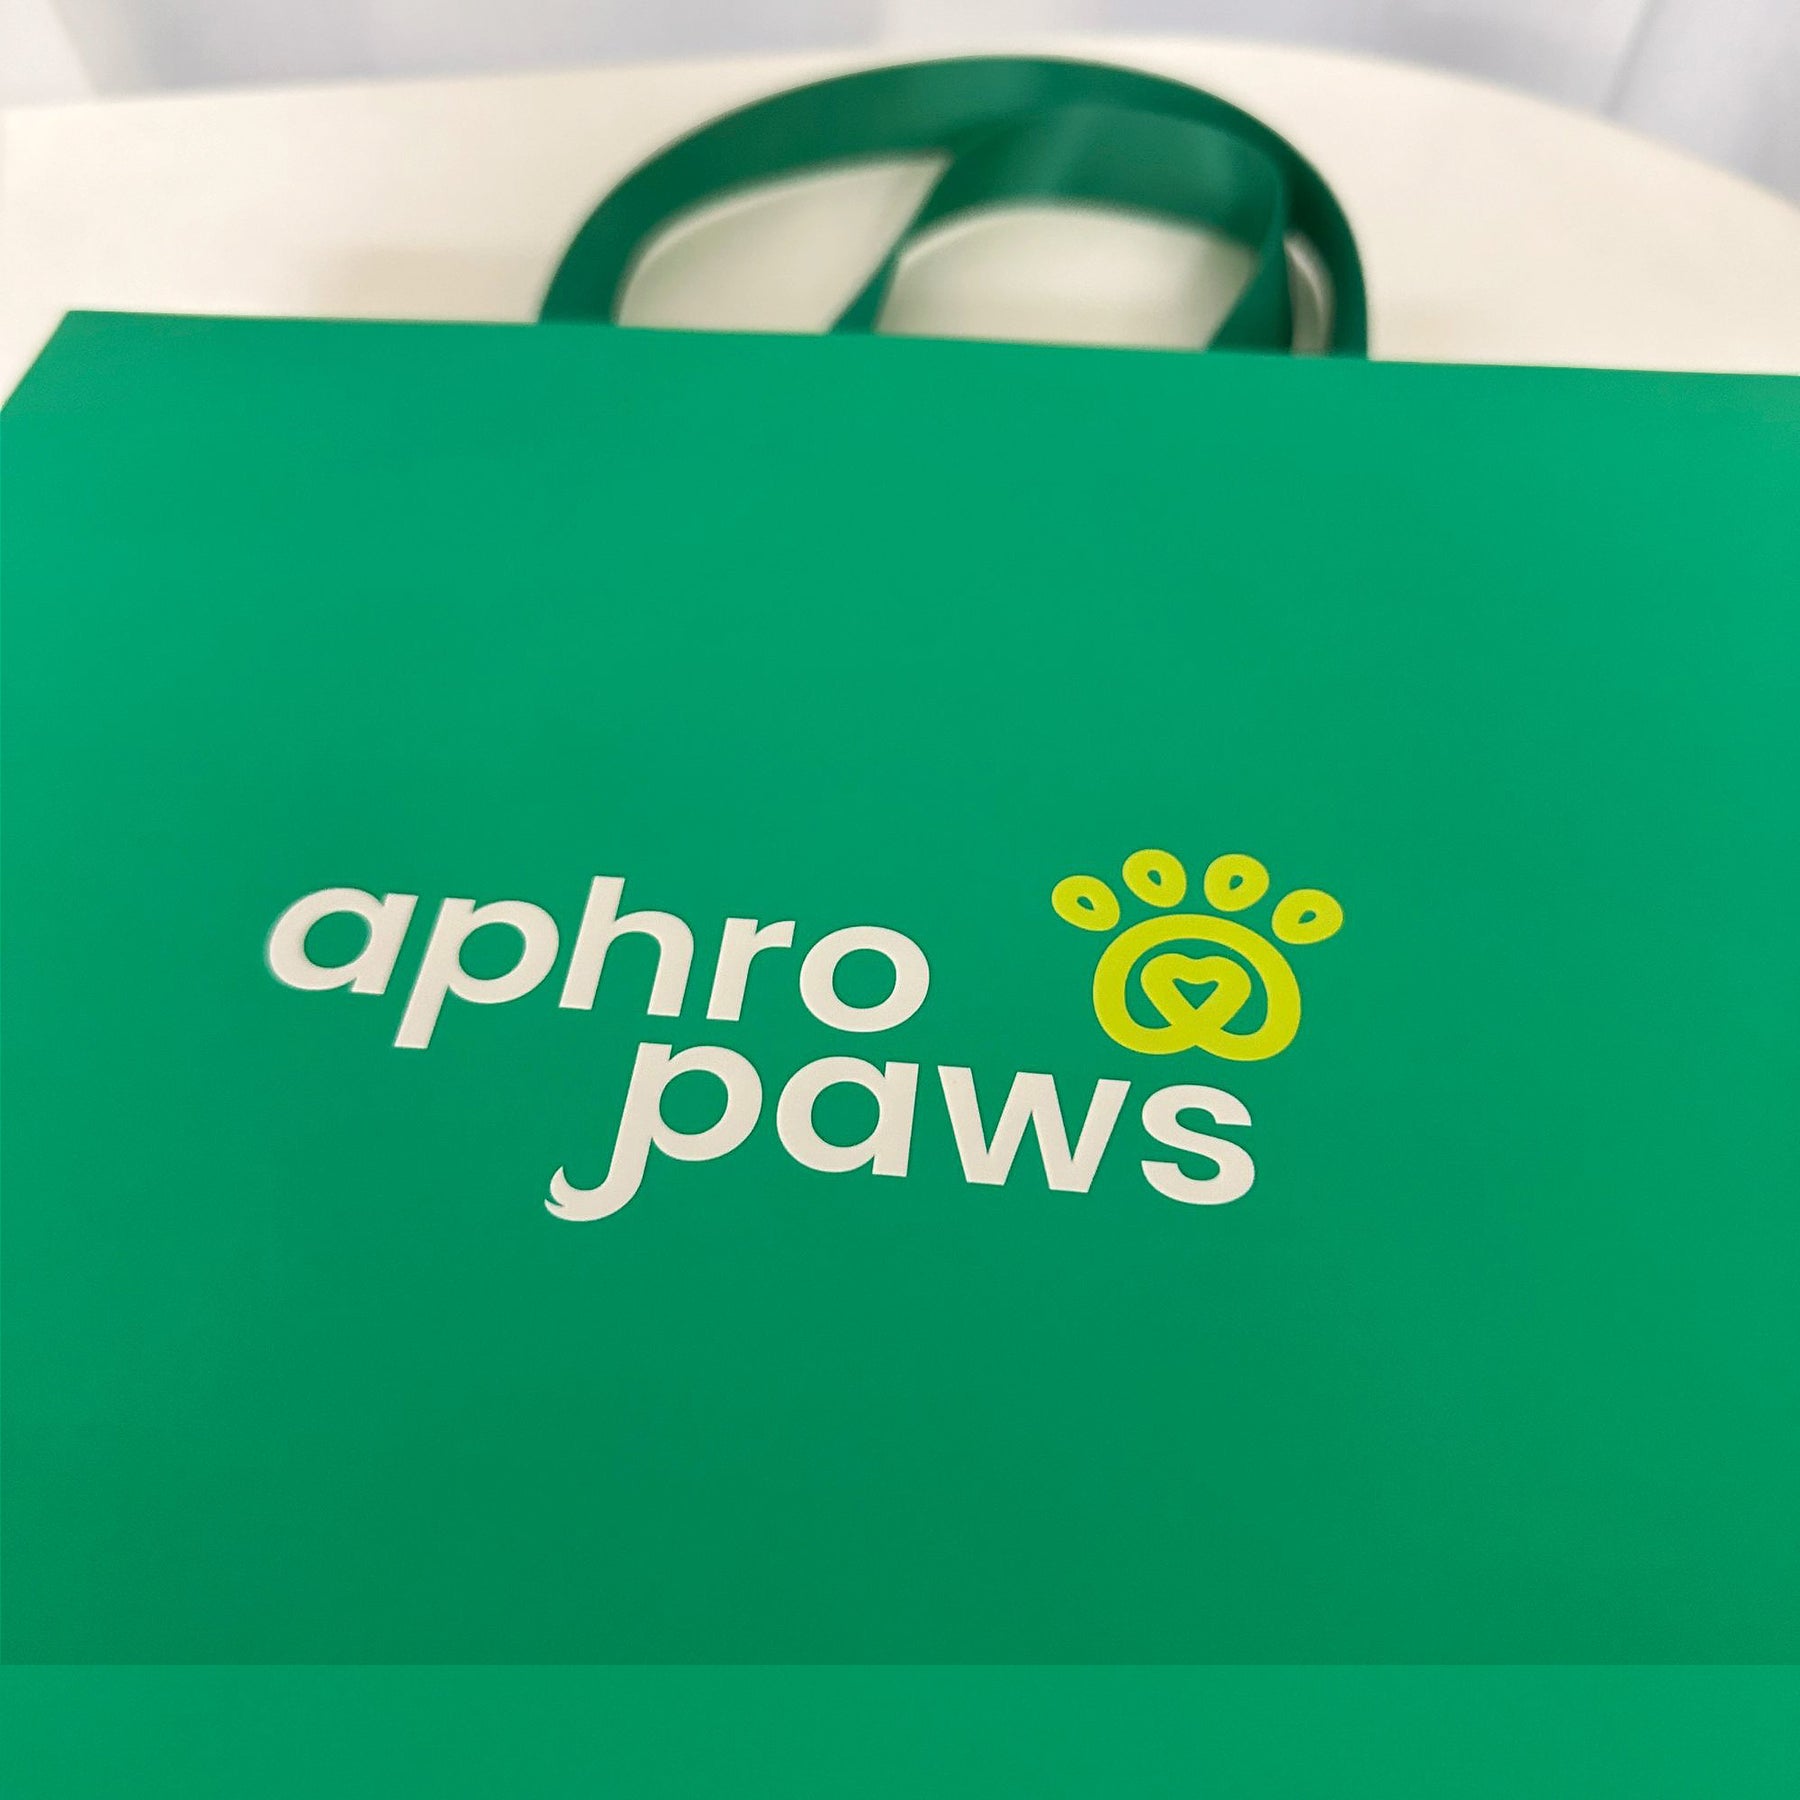 [Case Studies]Aphro Paws | Green Shopping Bag